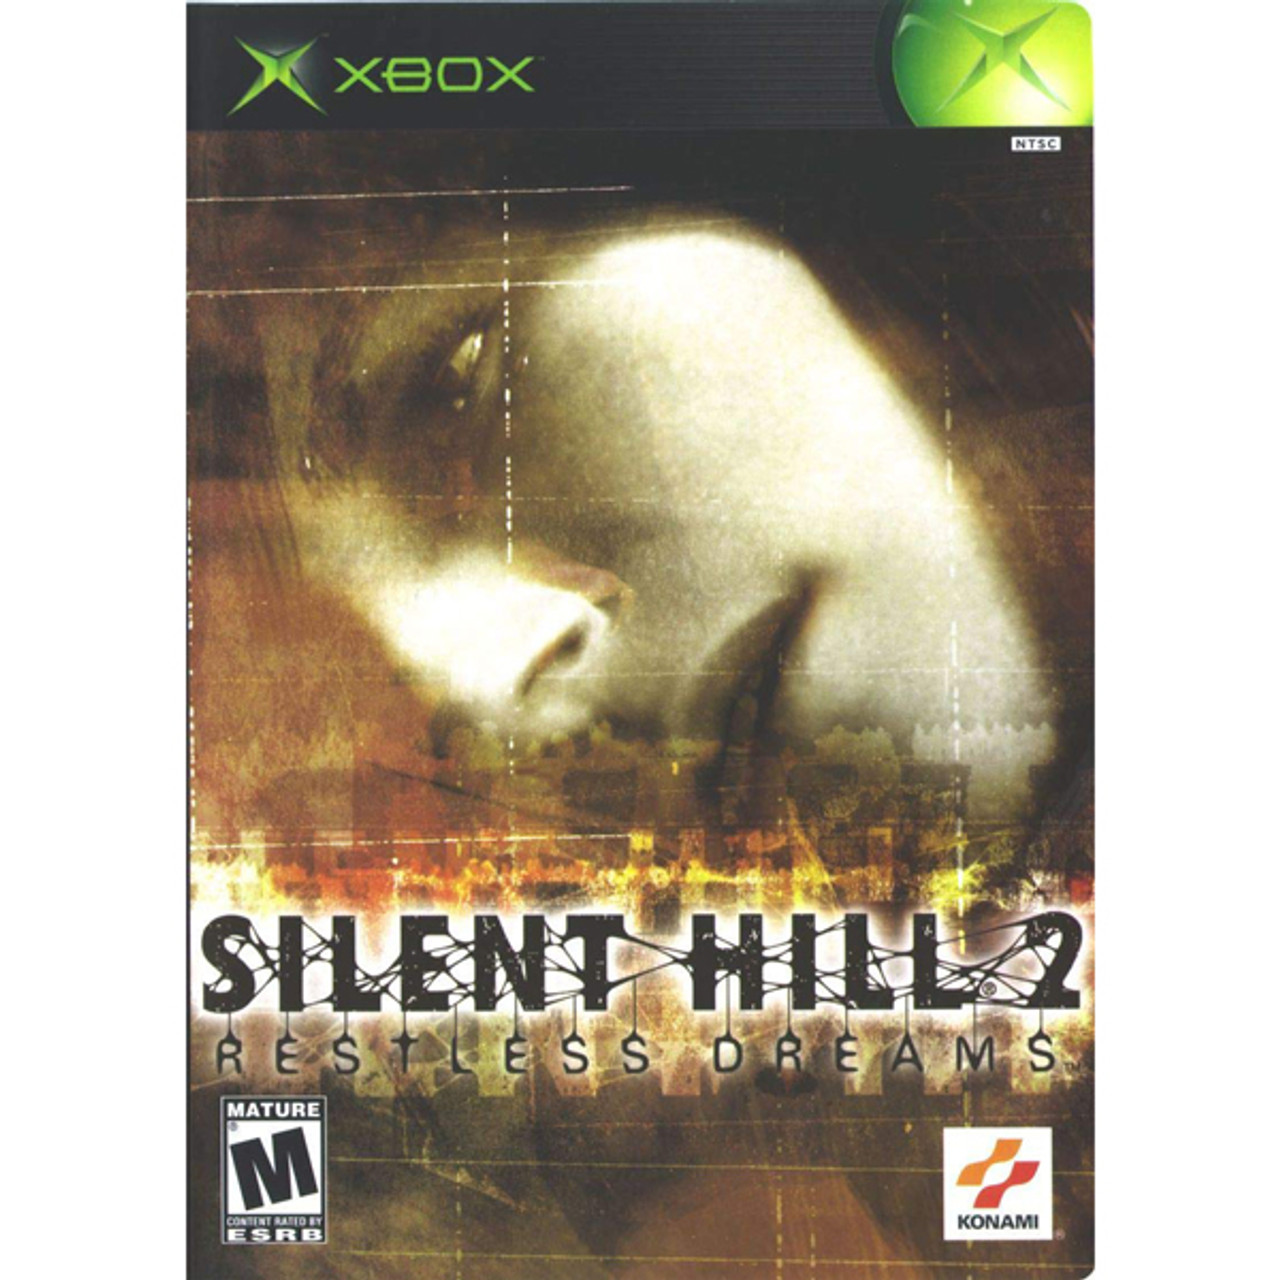 Silent Hill 2: Restless Dreams (Original Xbox) Game Profile 